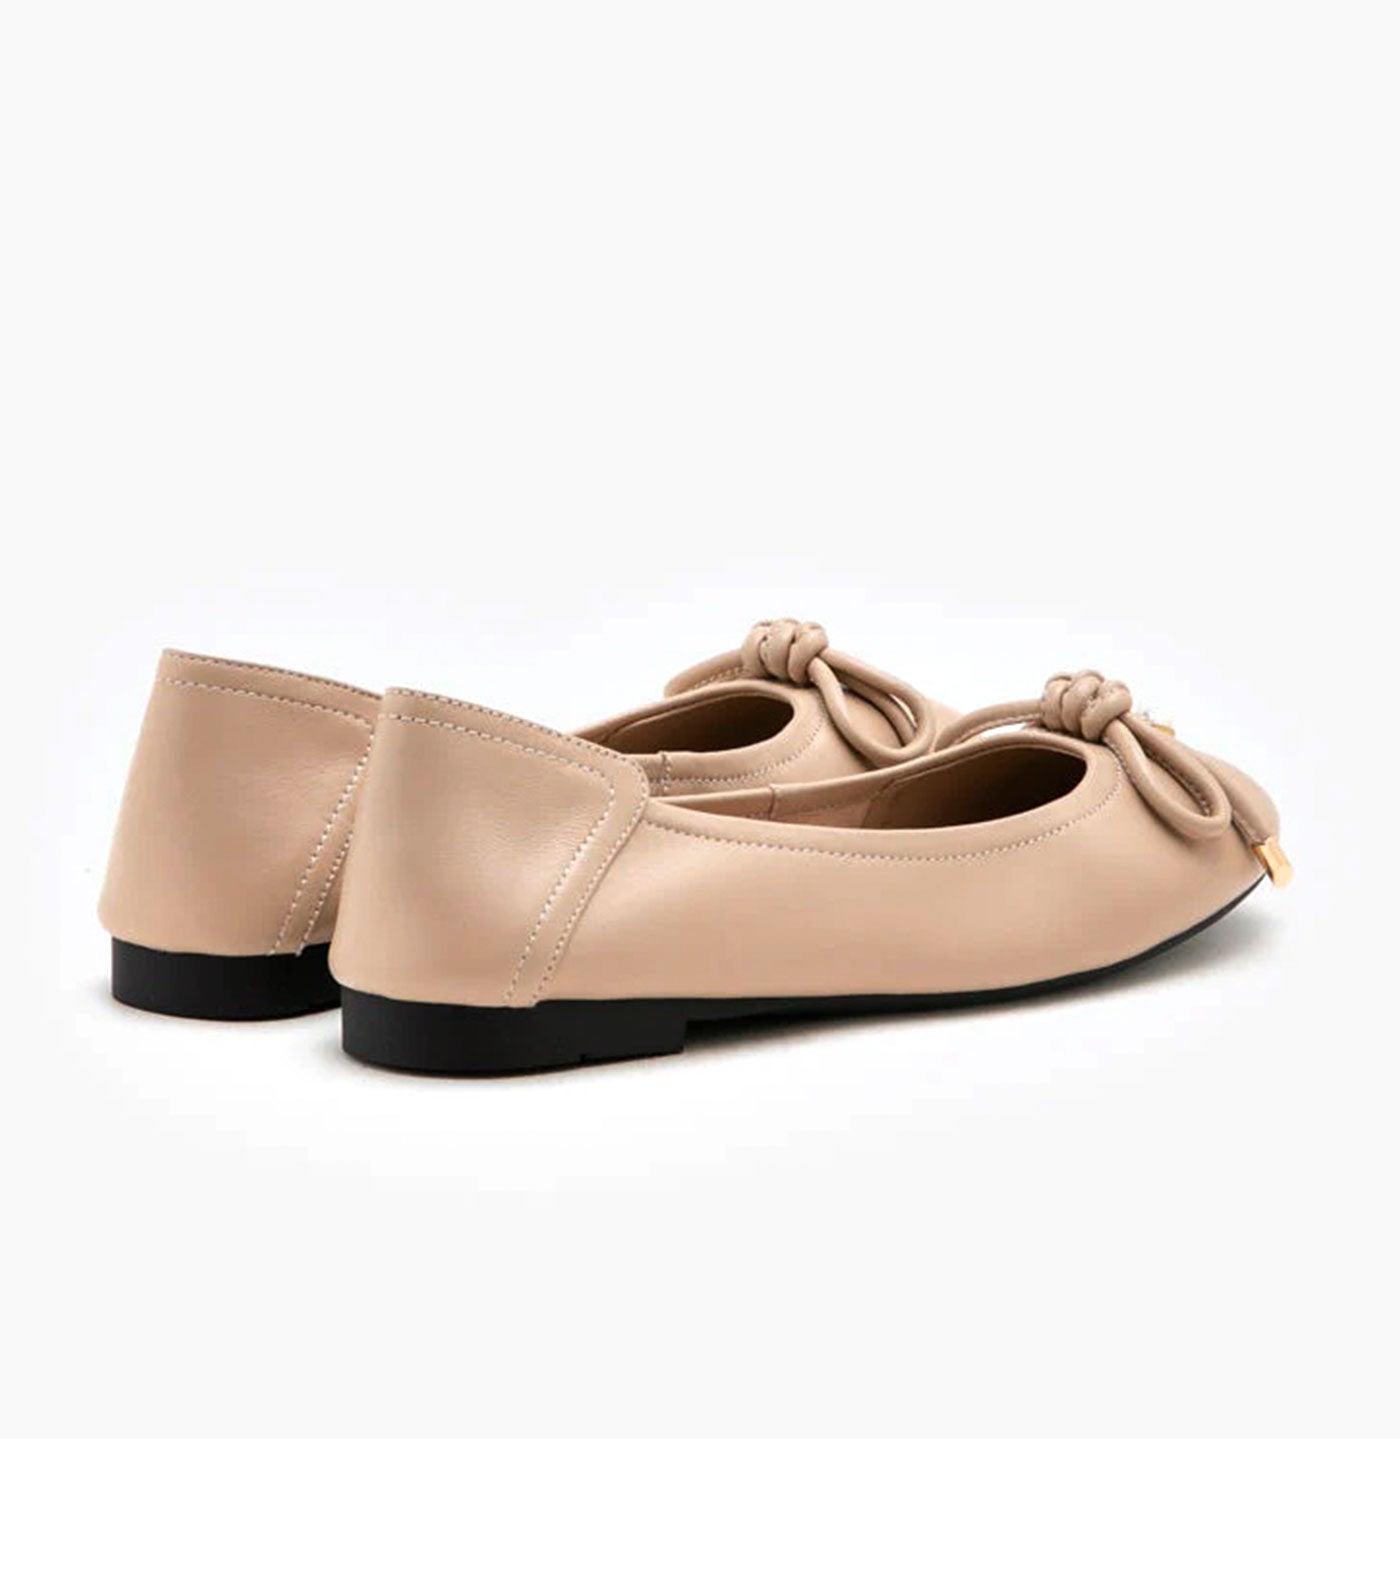 Valeria G Bow Embellished Leather Ballet Flats Almond